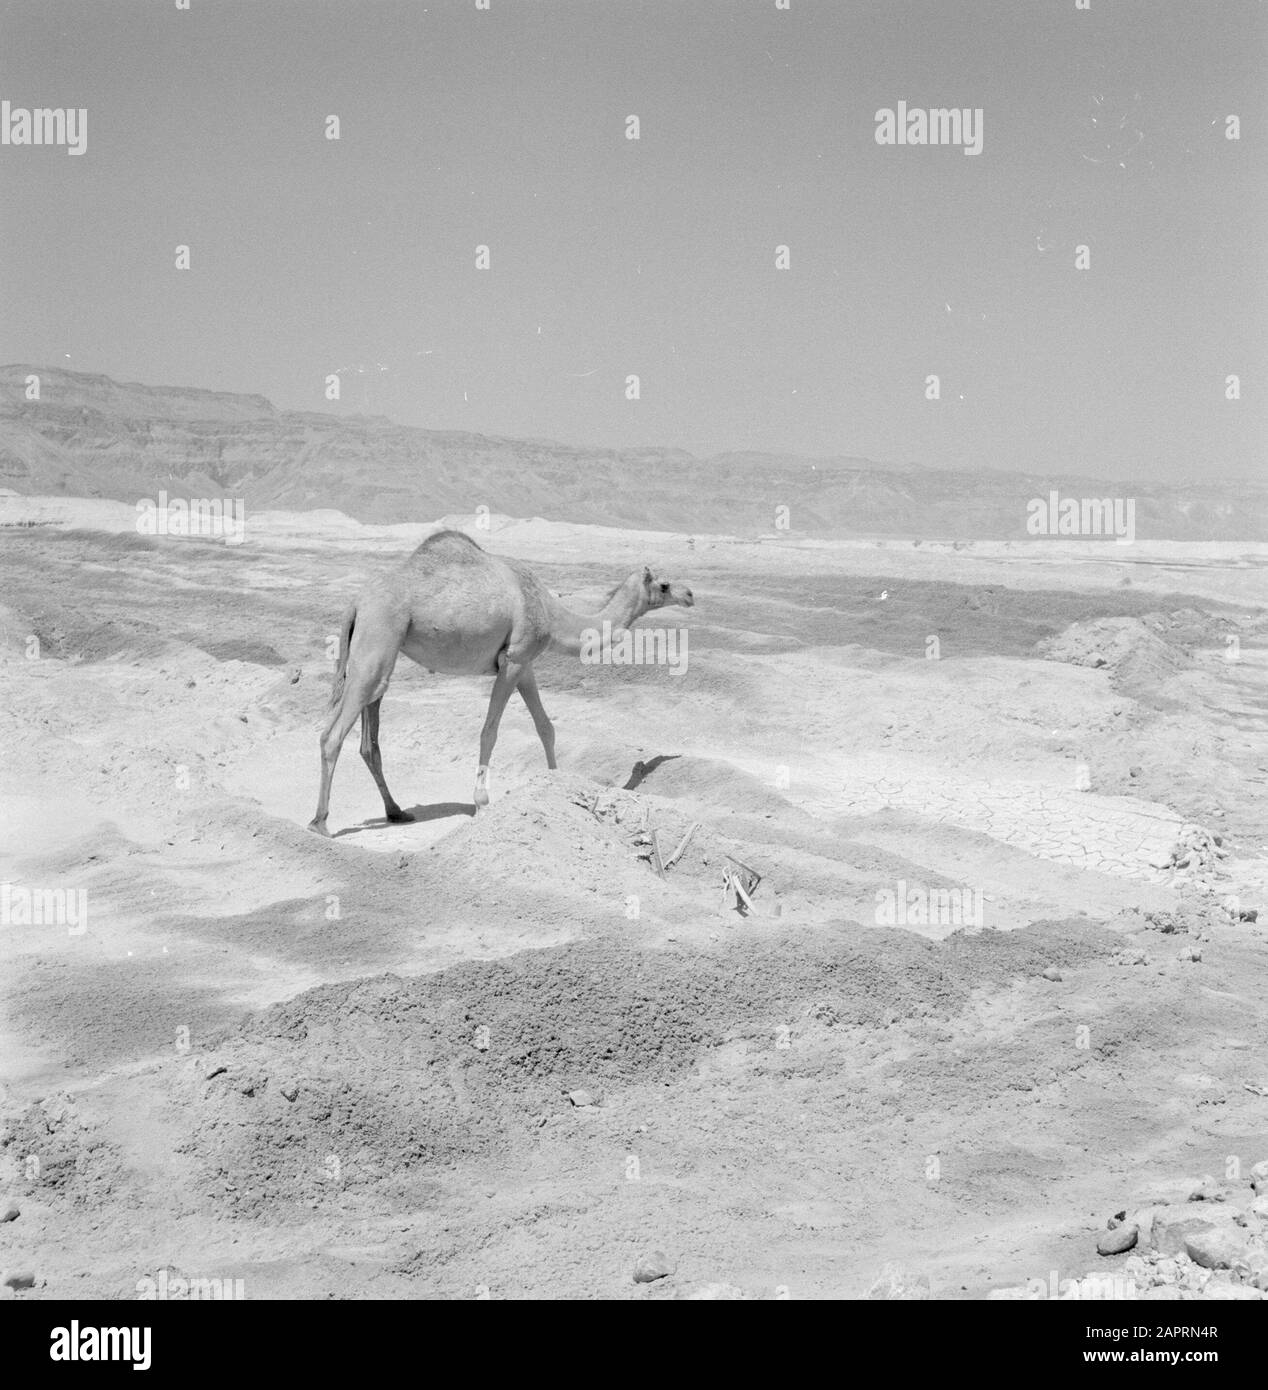 Israel 1964-1965: Dead Sea Area  Dromedaris in the desert near the Dead Sea. Date: 1964 Location: Israel Keywords: dromedaries, deserts Stock Photo